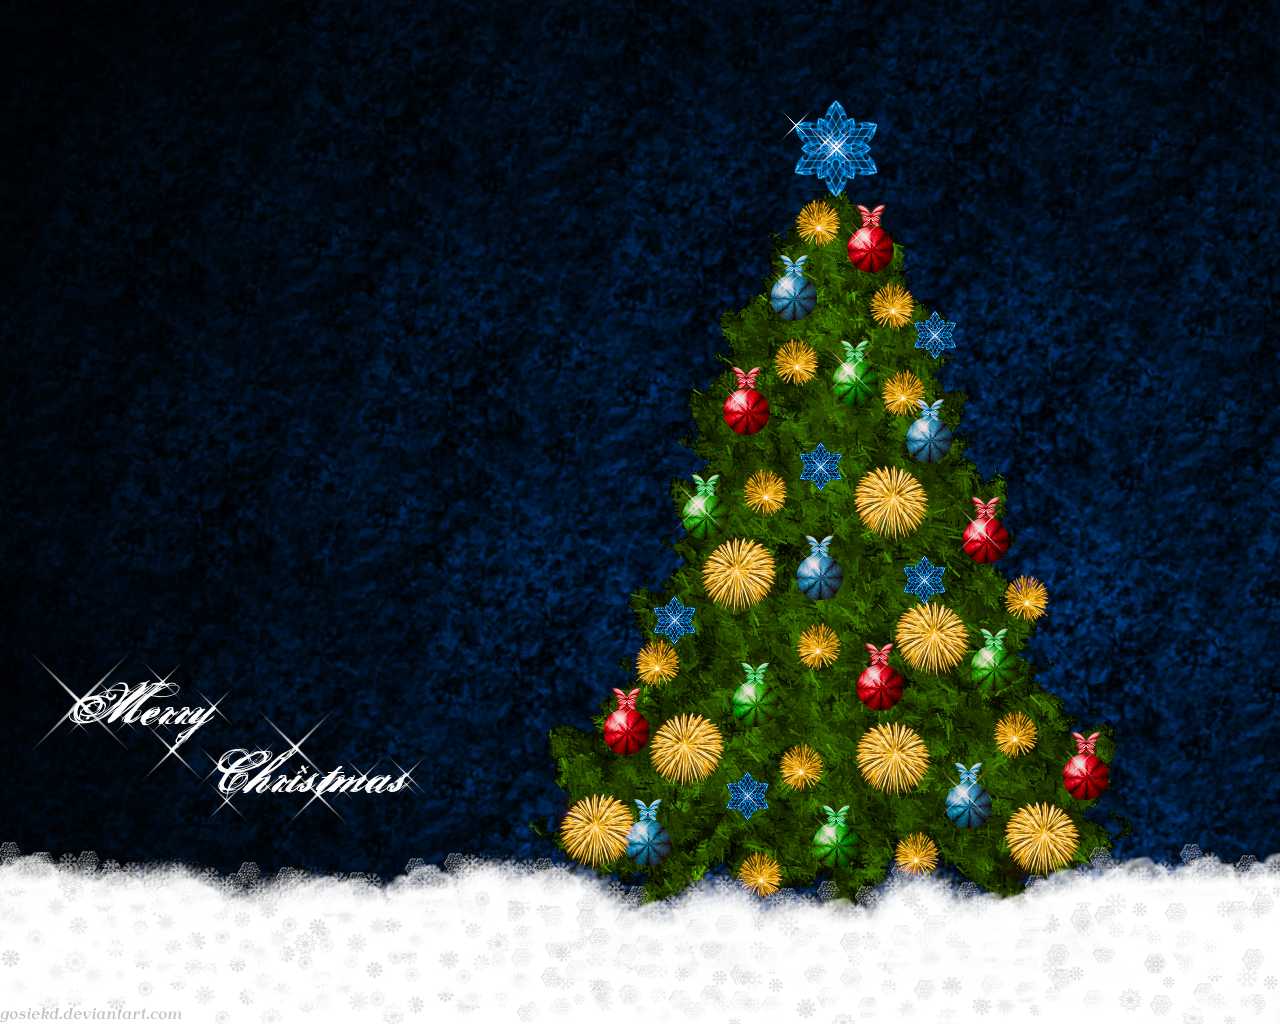 Christmas Tree Wallpaper By Gosiekd